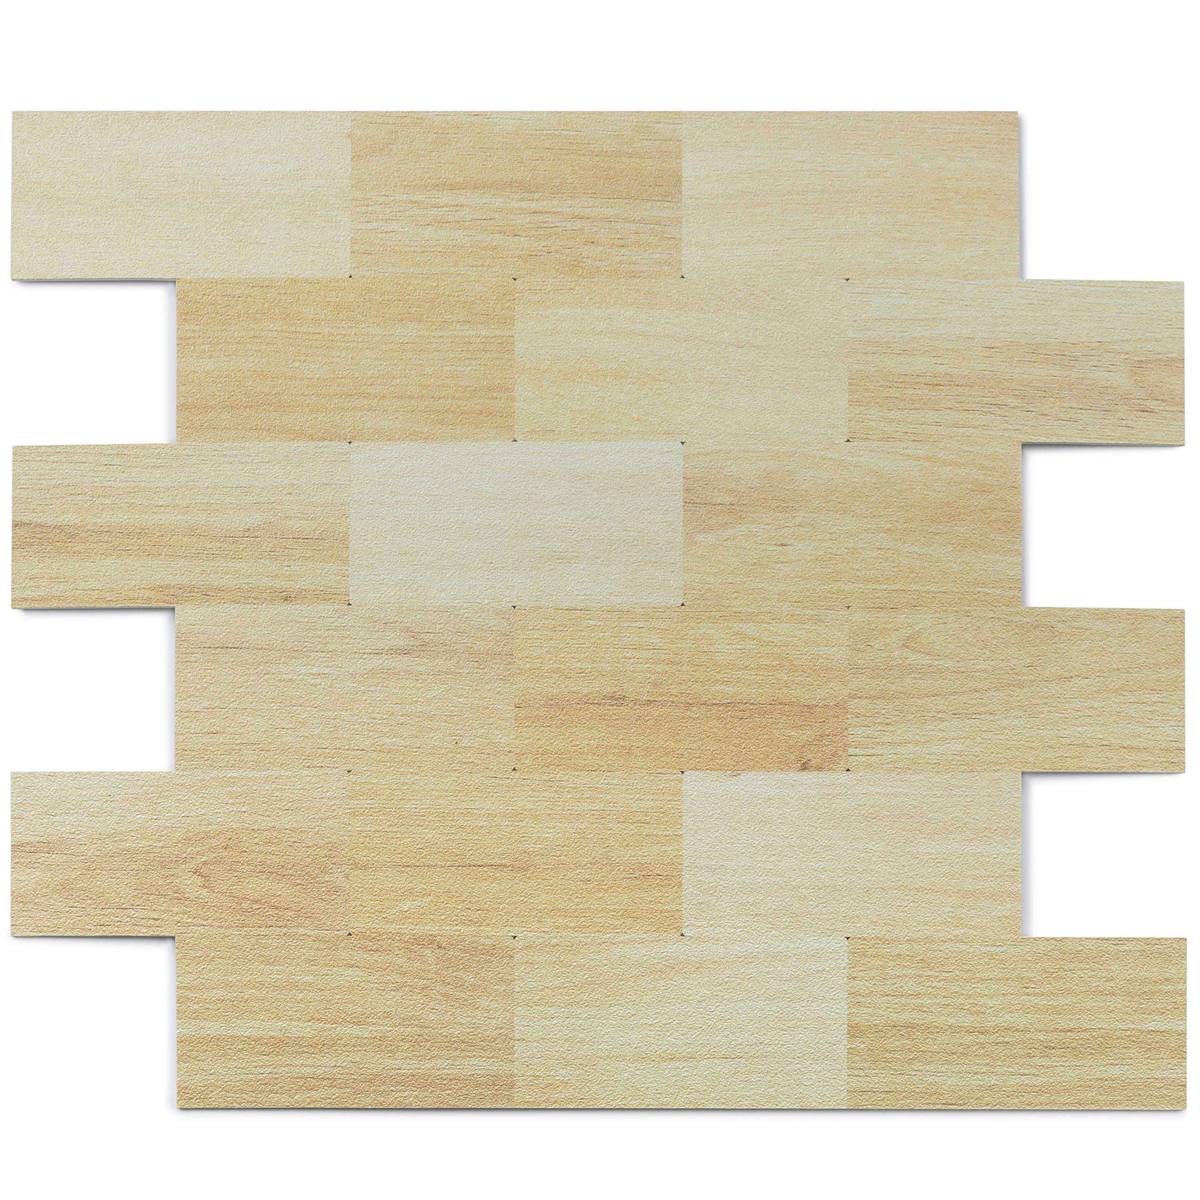 Wood pattern peel and stick backsplash tile